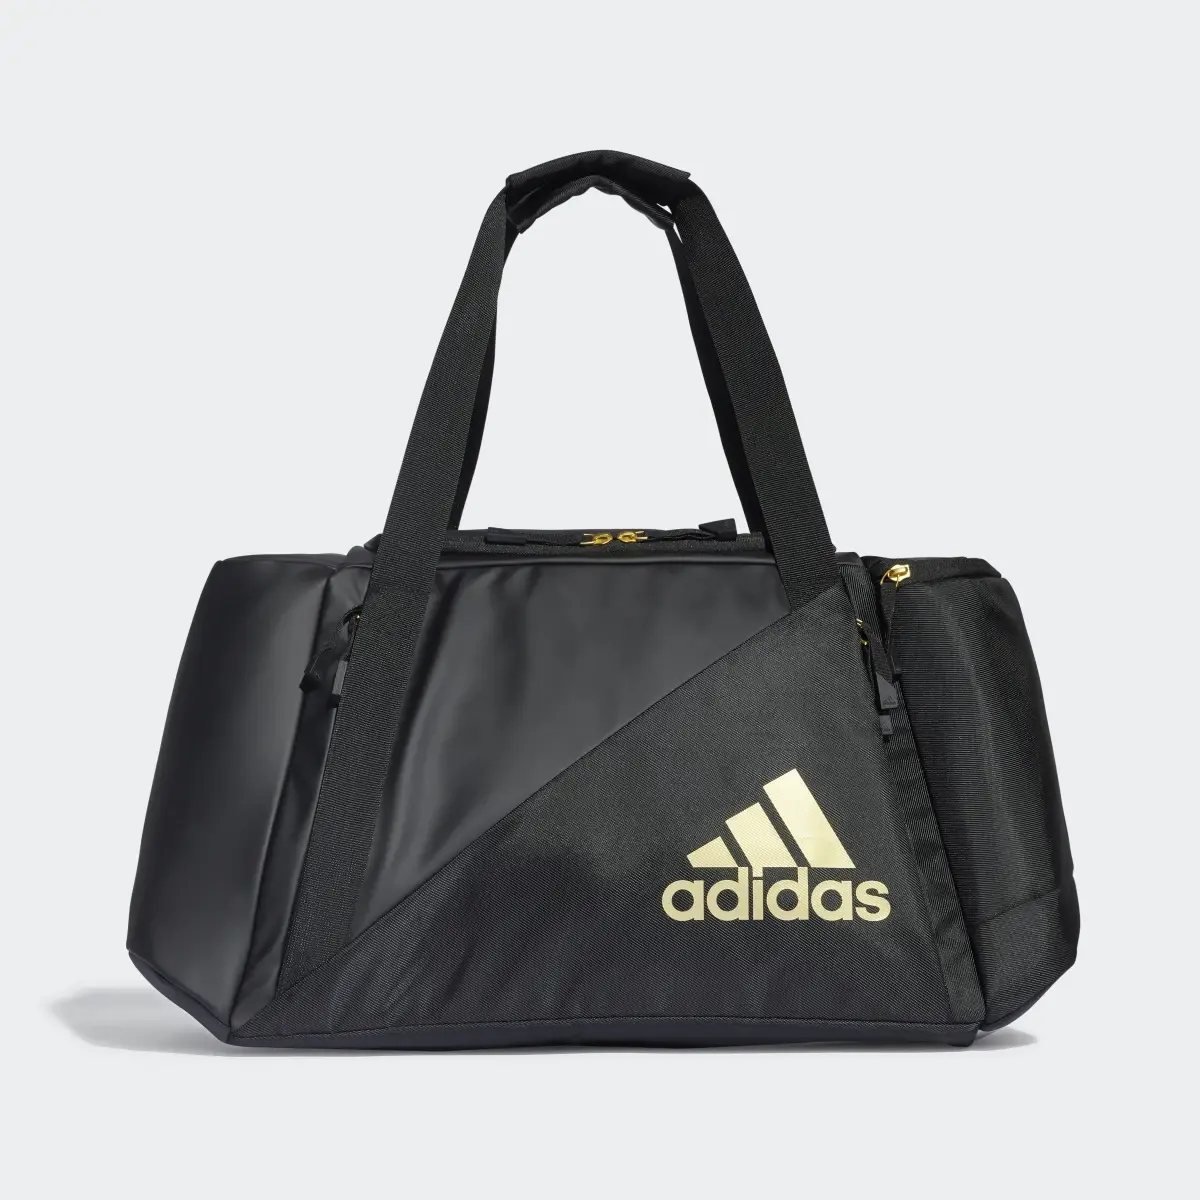 Adidas VS.6 Black/Gold Holdall Bag. 2